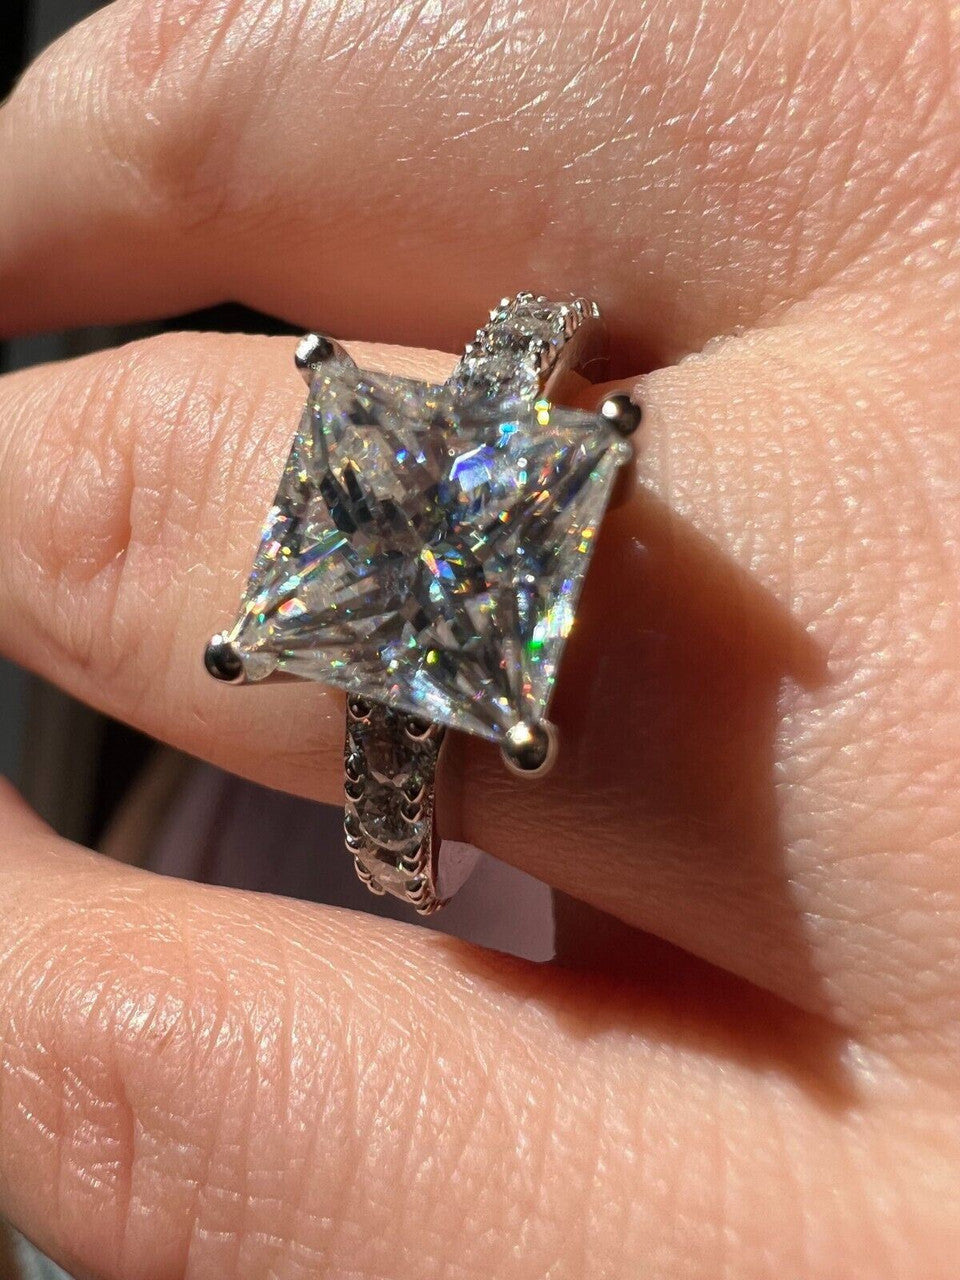 14K Vermeil Square Princess Cut Moissanite Engagement Promise Ring 925 Sterling Silver